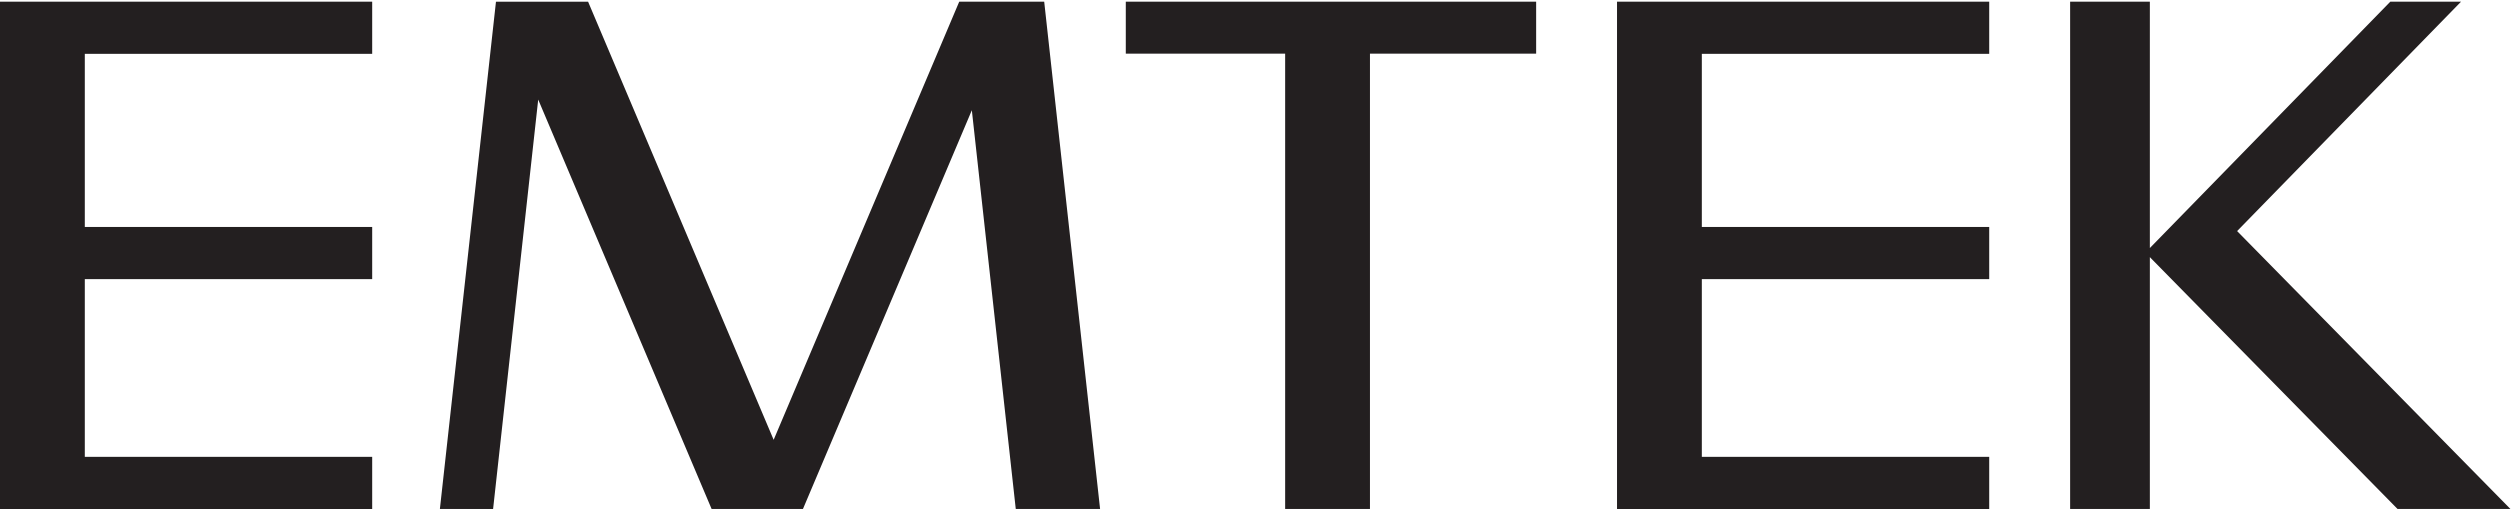 EMTEK_logo